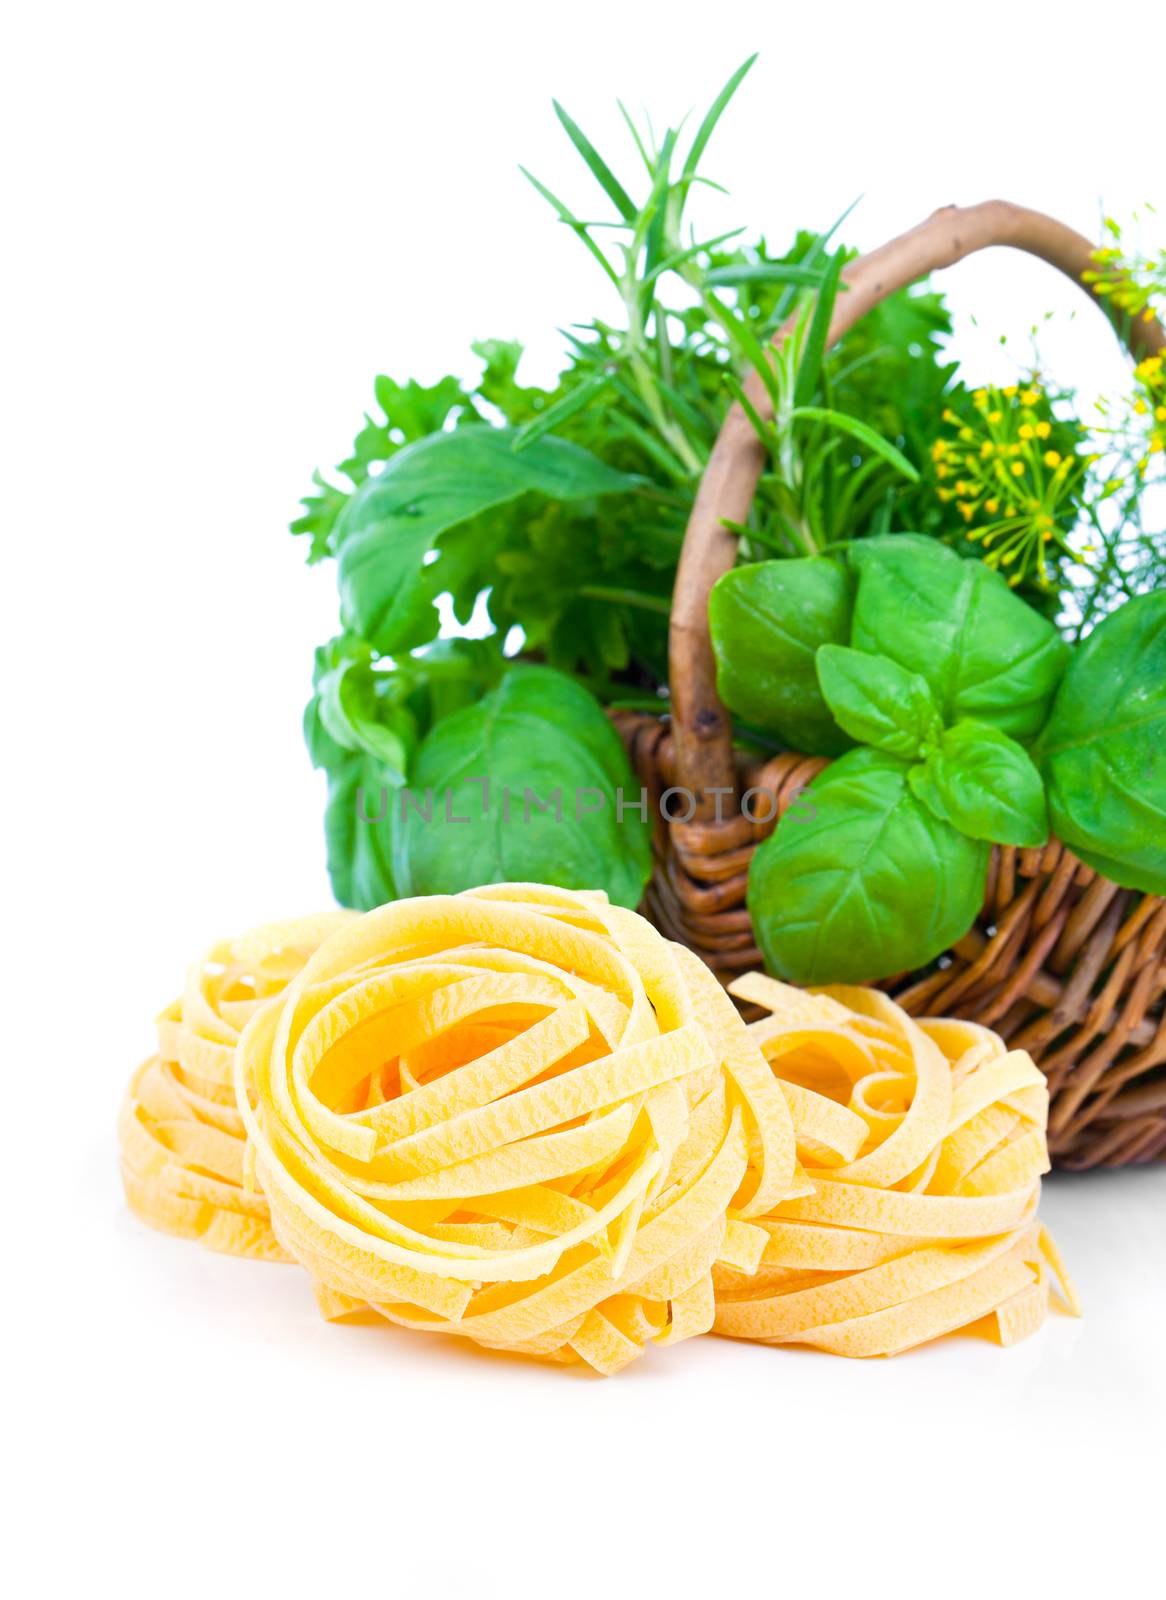 Italian pasta fettuccine nest with wicker basket green herbs, on white background